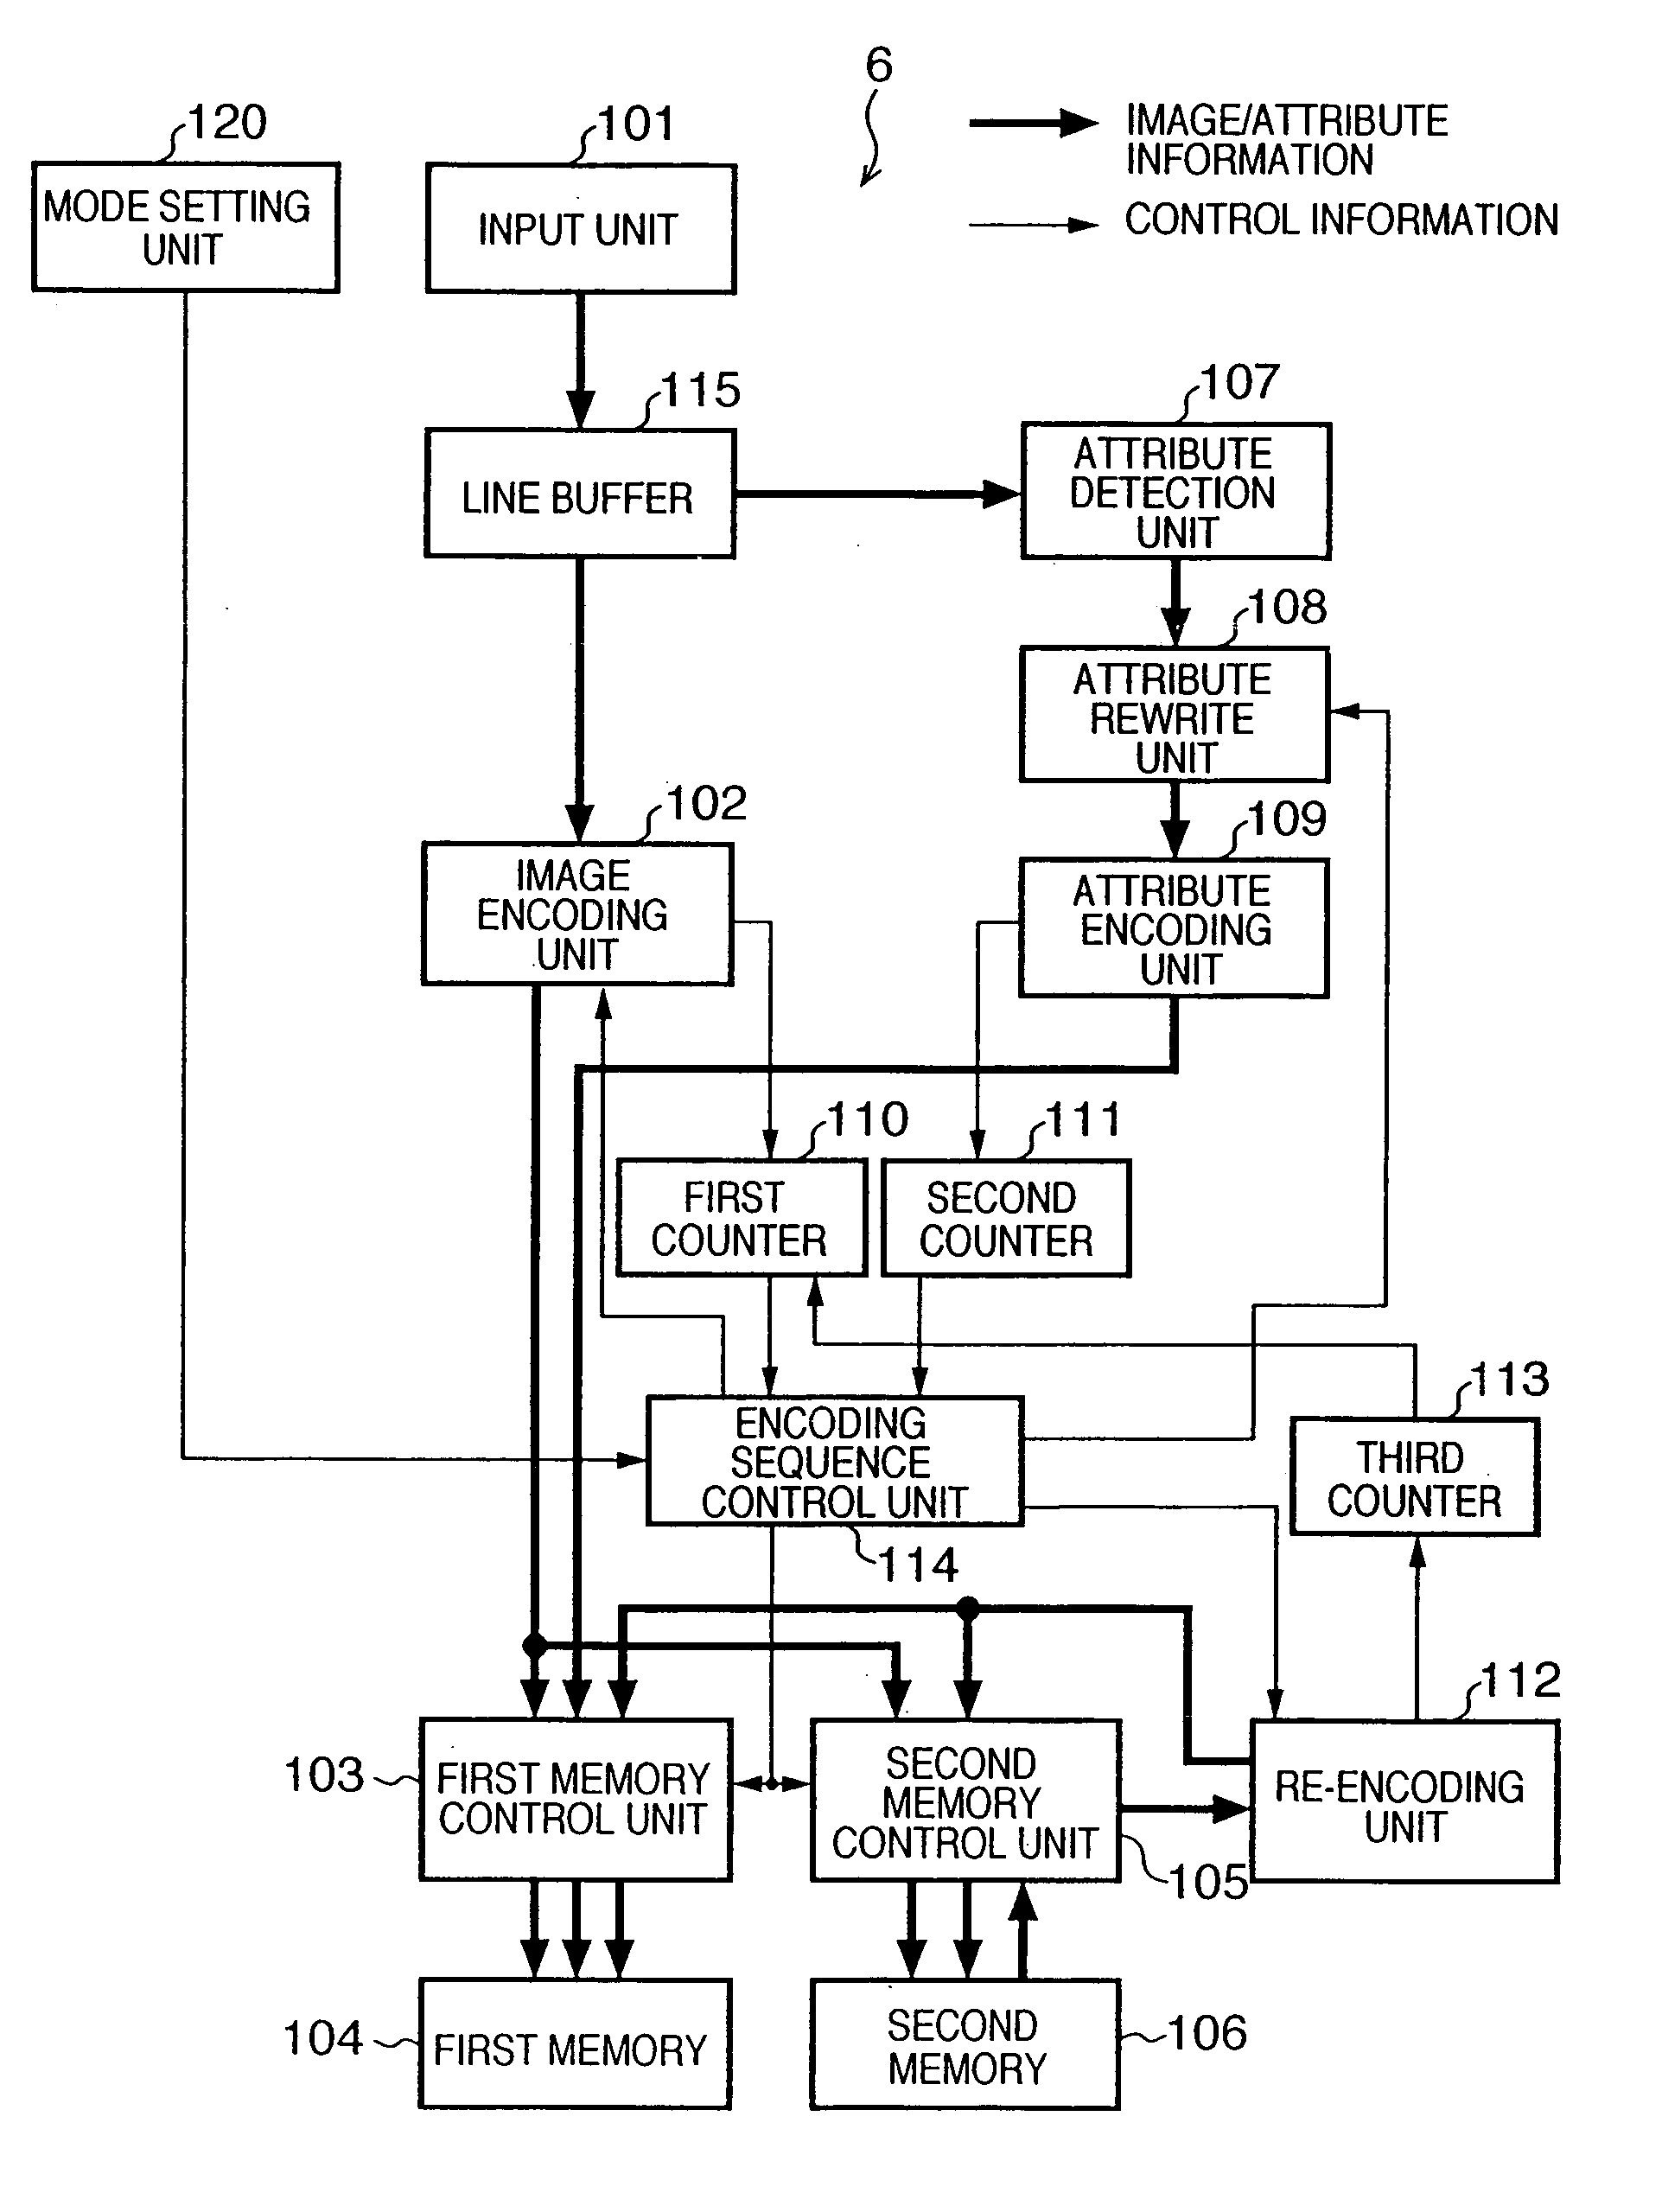 Image encoding apparatus and method, computer program, computer-readable storage medium, and image forming apparatus